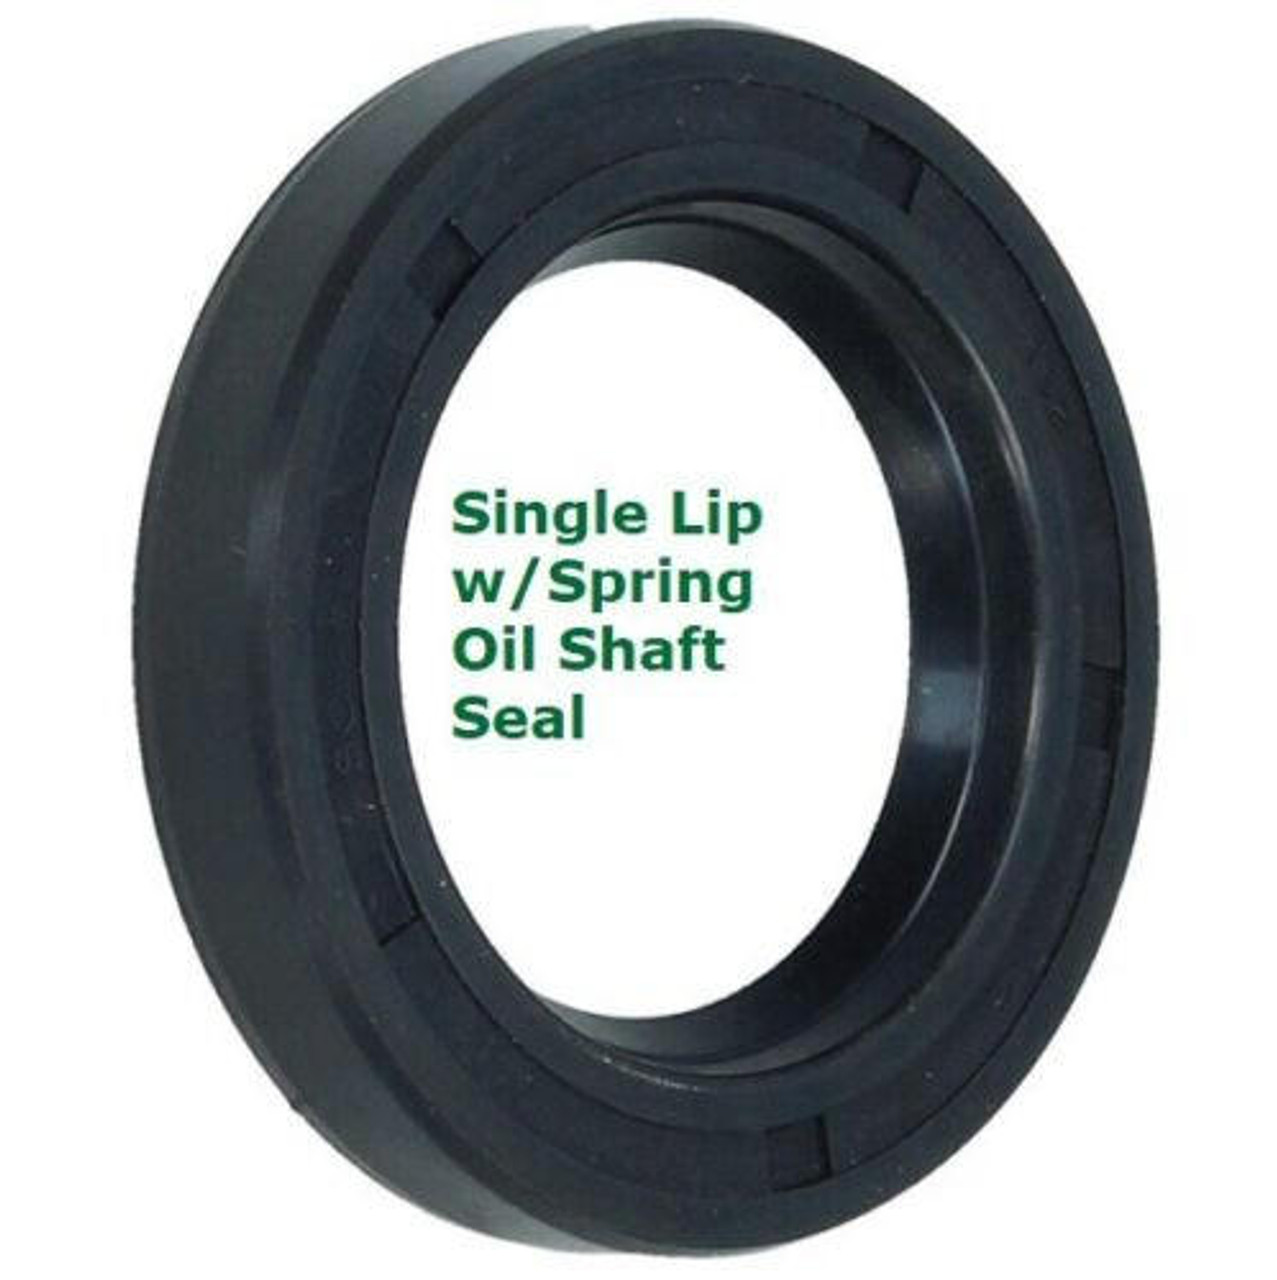 Metric Oil Shaft Seal 14 x 35 x 7mm  Single Lip   Price for 1 pc